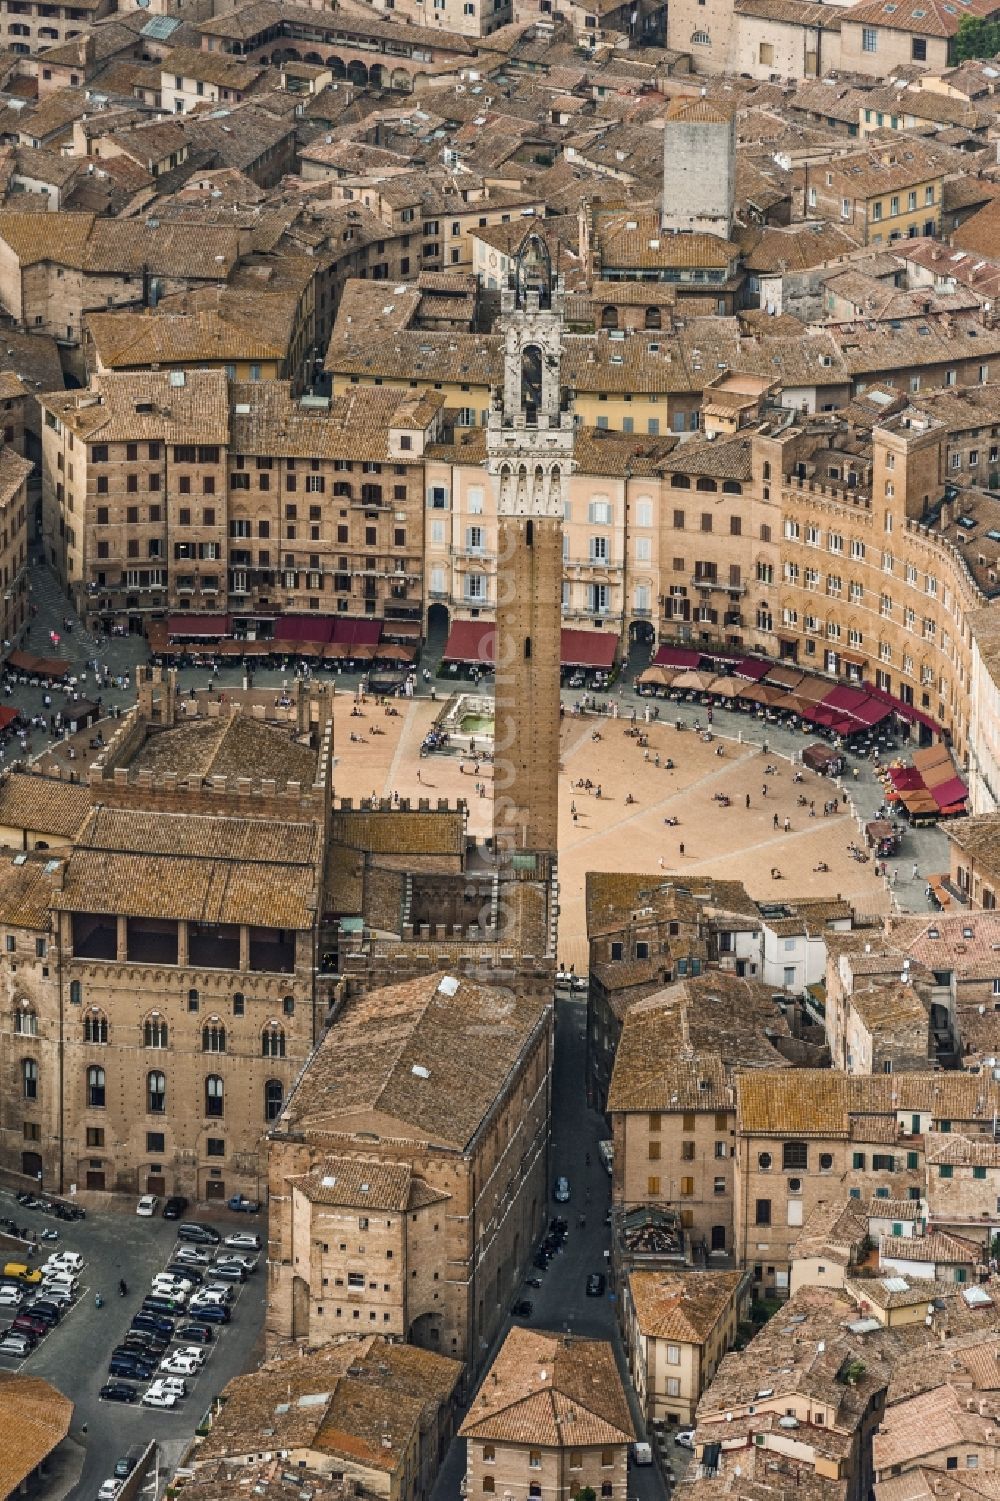 Luftbild Siena - Plazza del Campo in Siena in der gleichnamigen Provinz in Italien